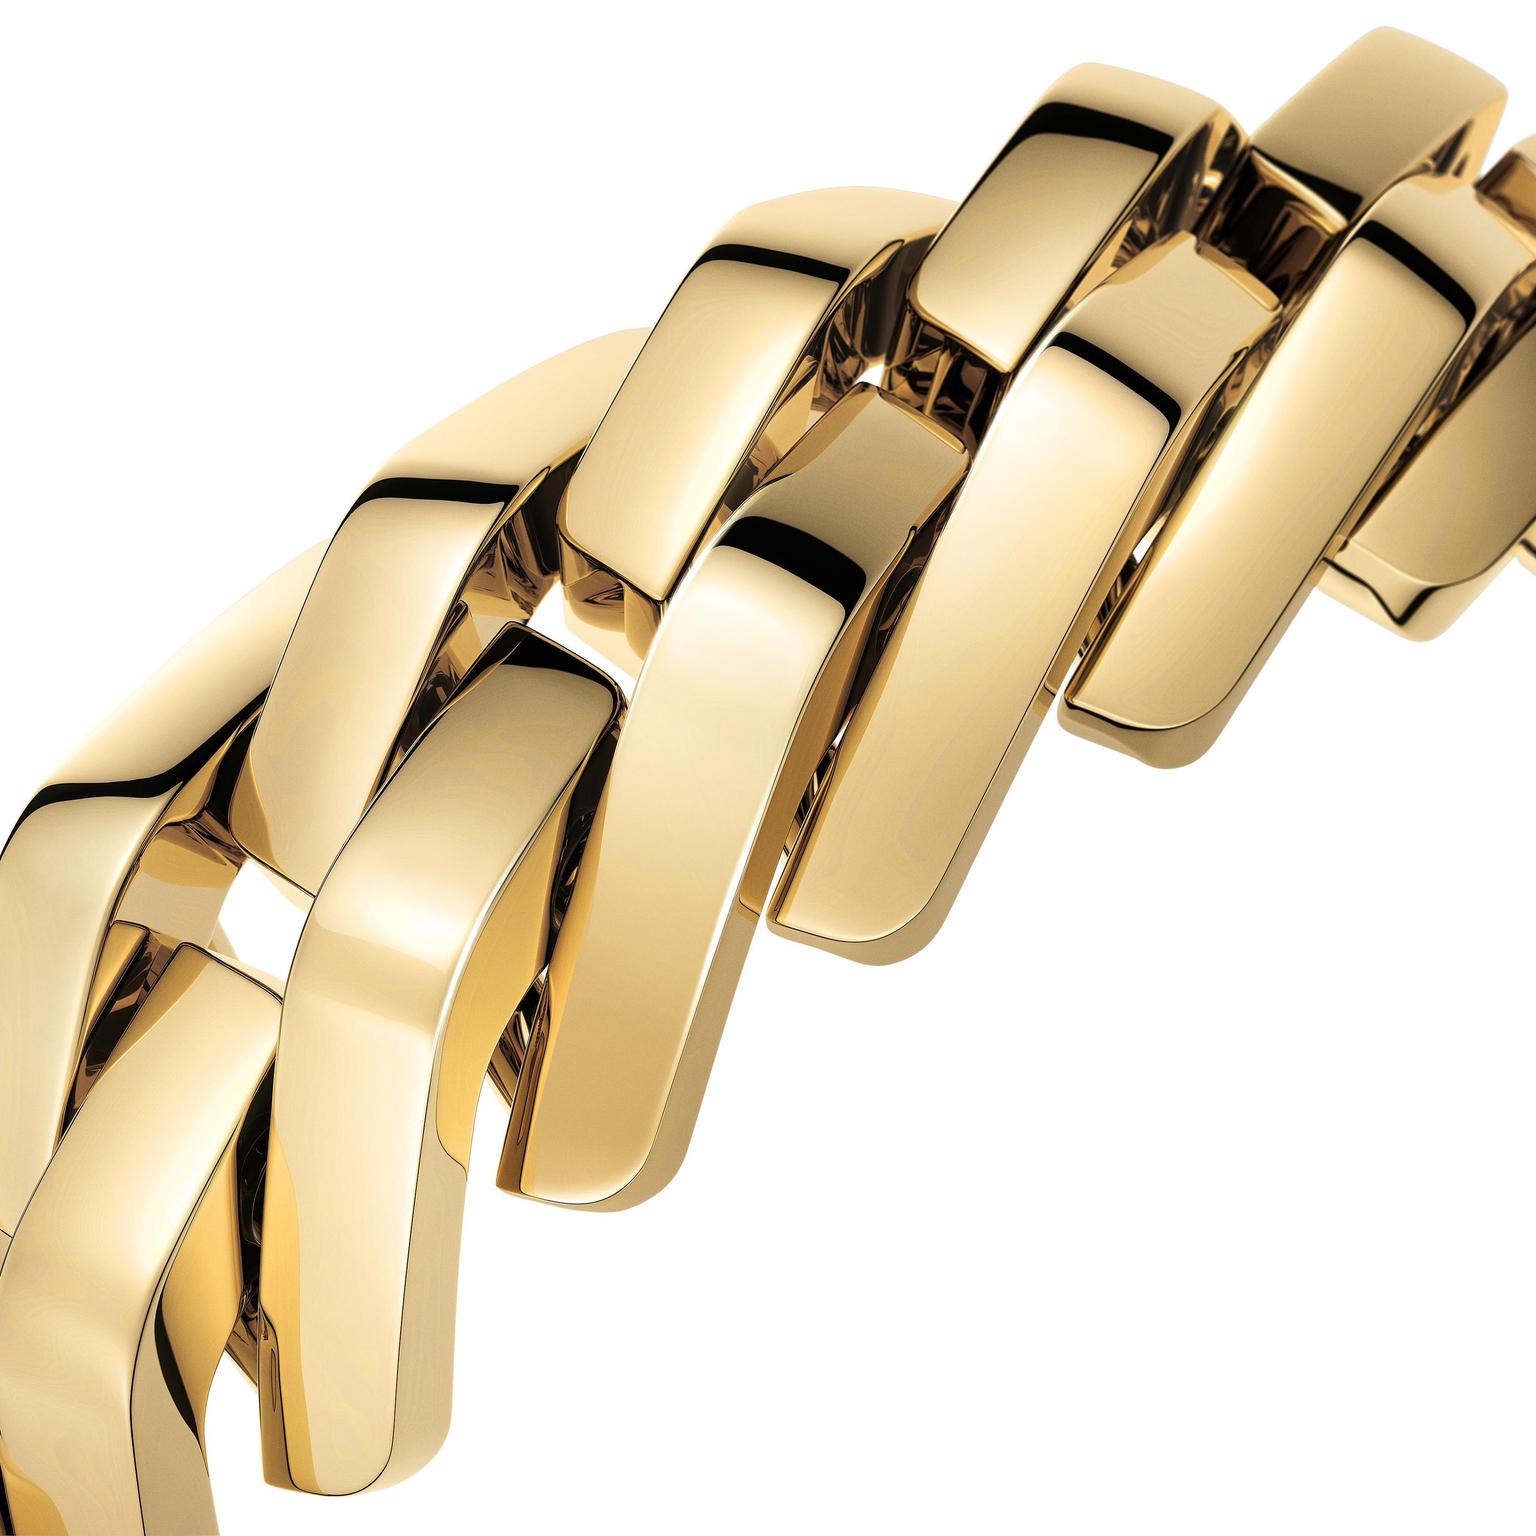 Bracelet links from Maillon de Cartier